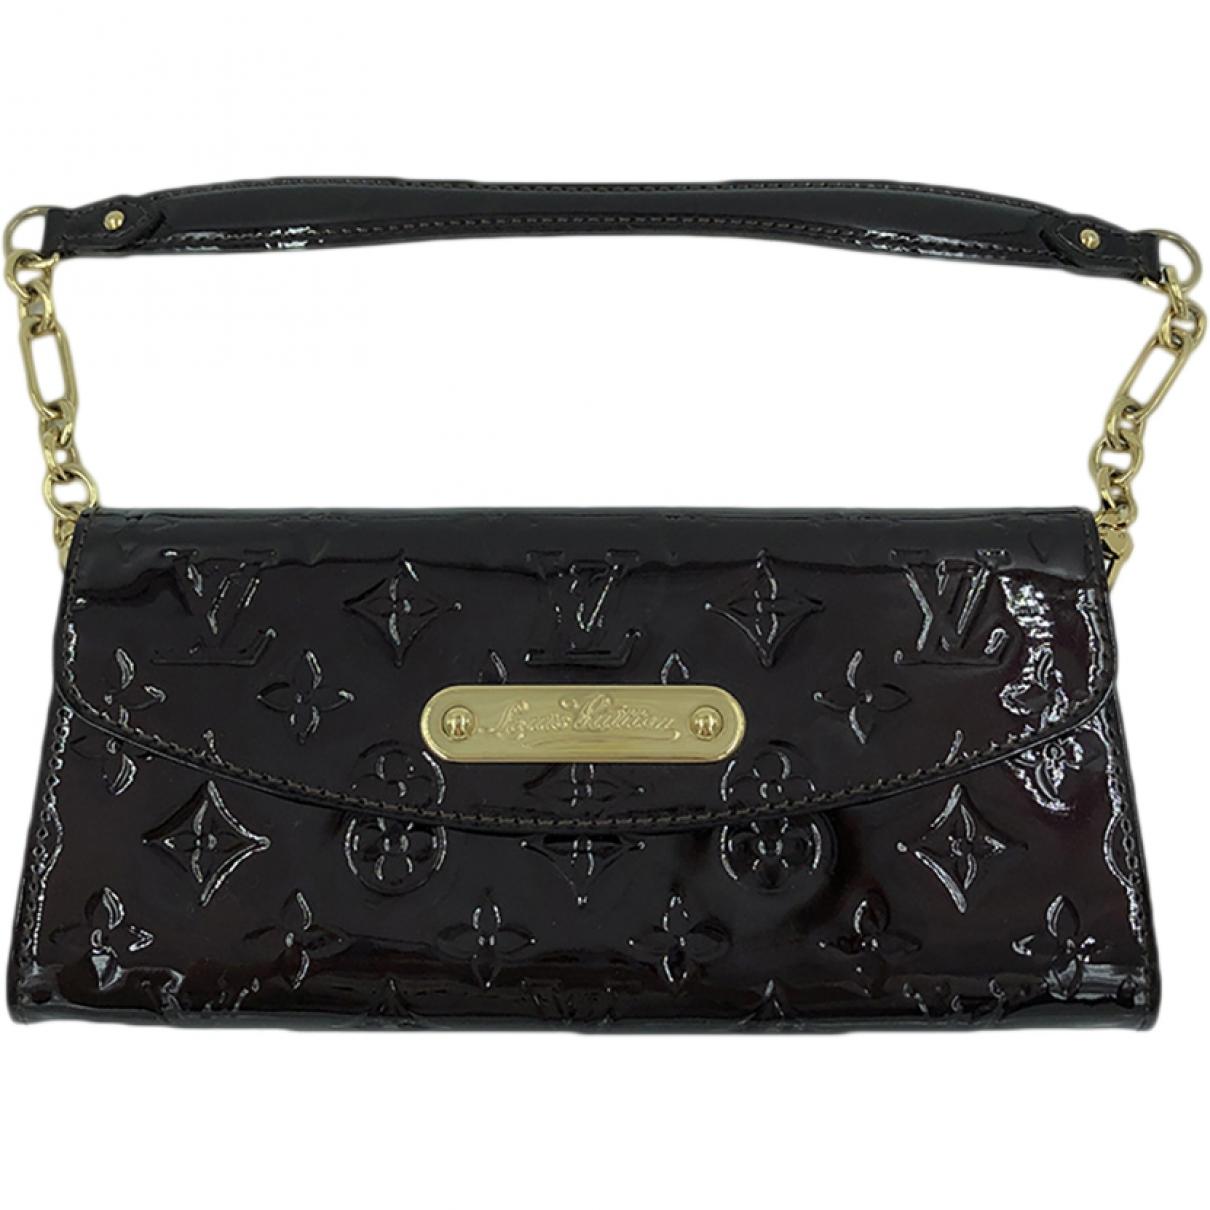 Louis Vuitton Eva Burgundy Patent Leather Clutch Bag in Black - Lyst